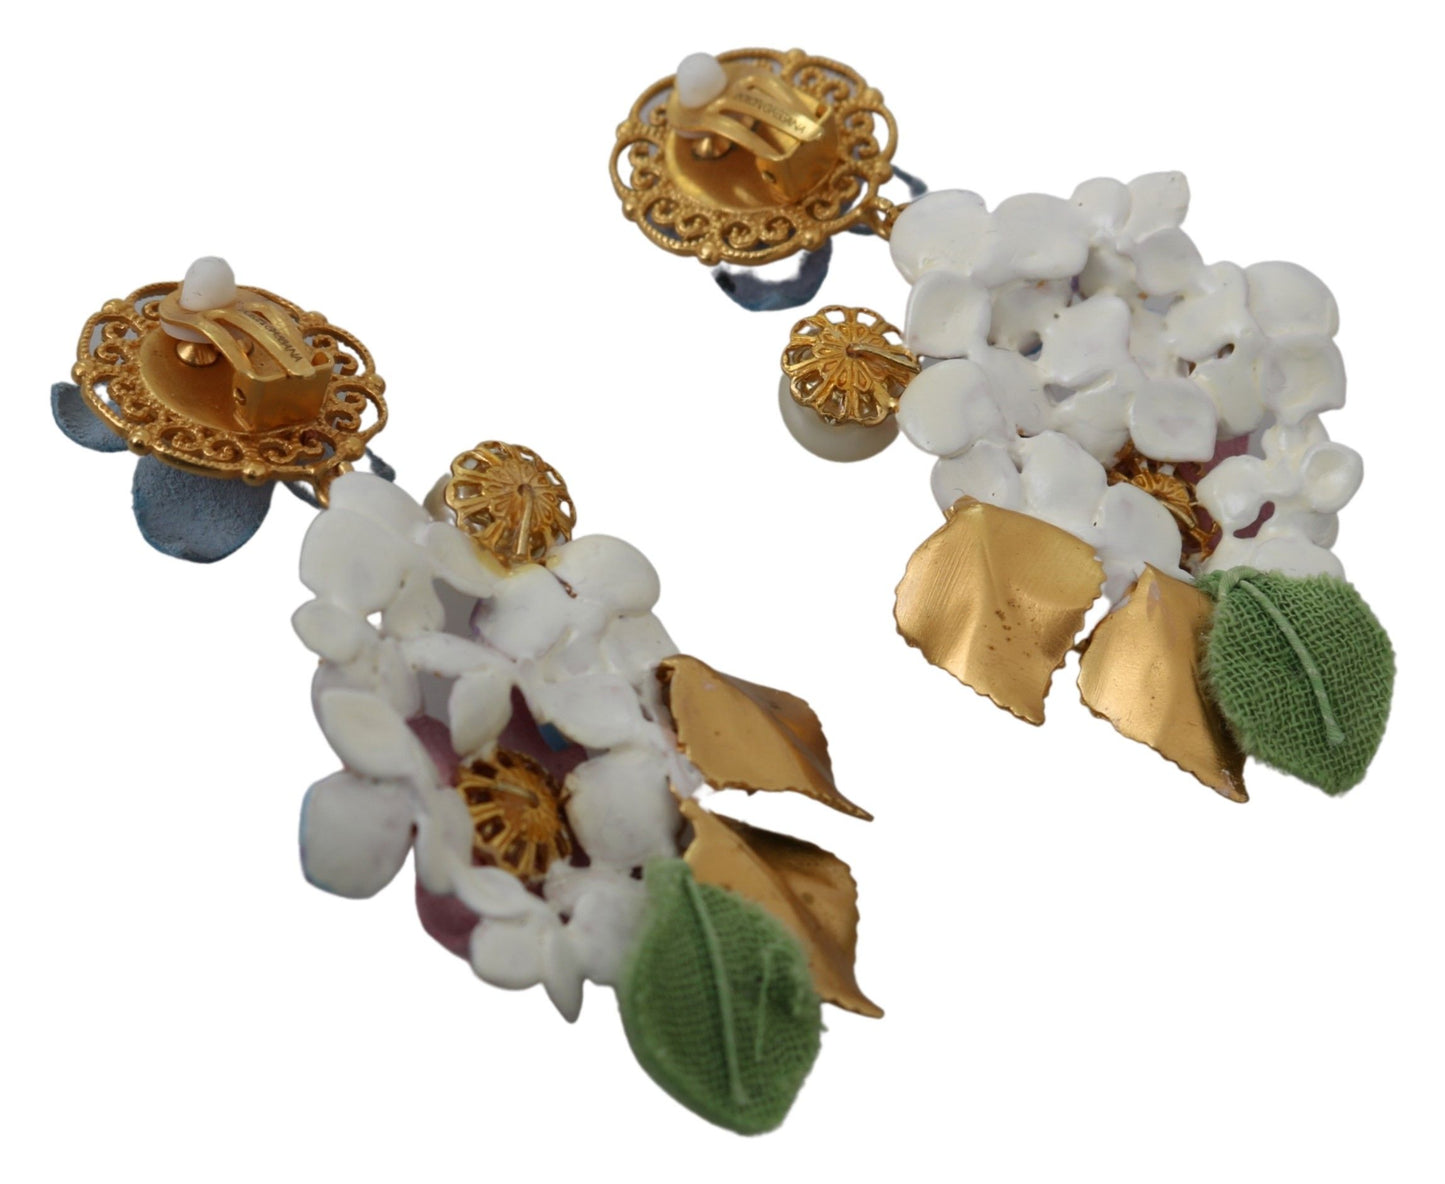 Enchanting Floral Clip-On Earrings